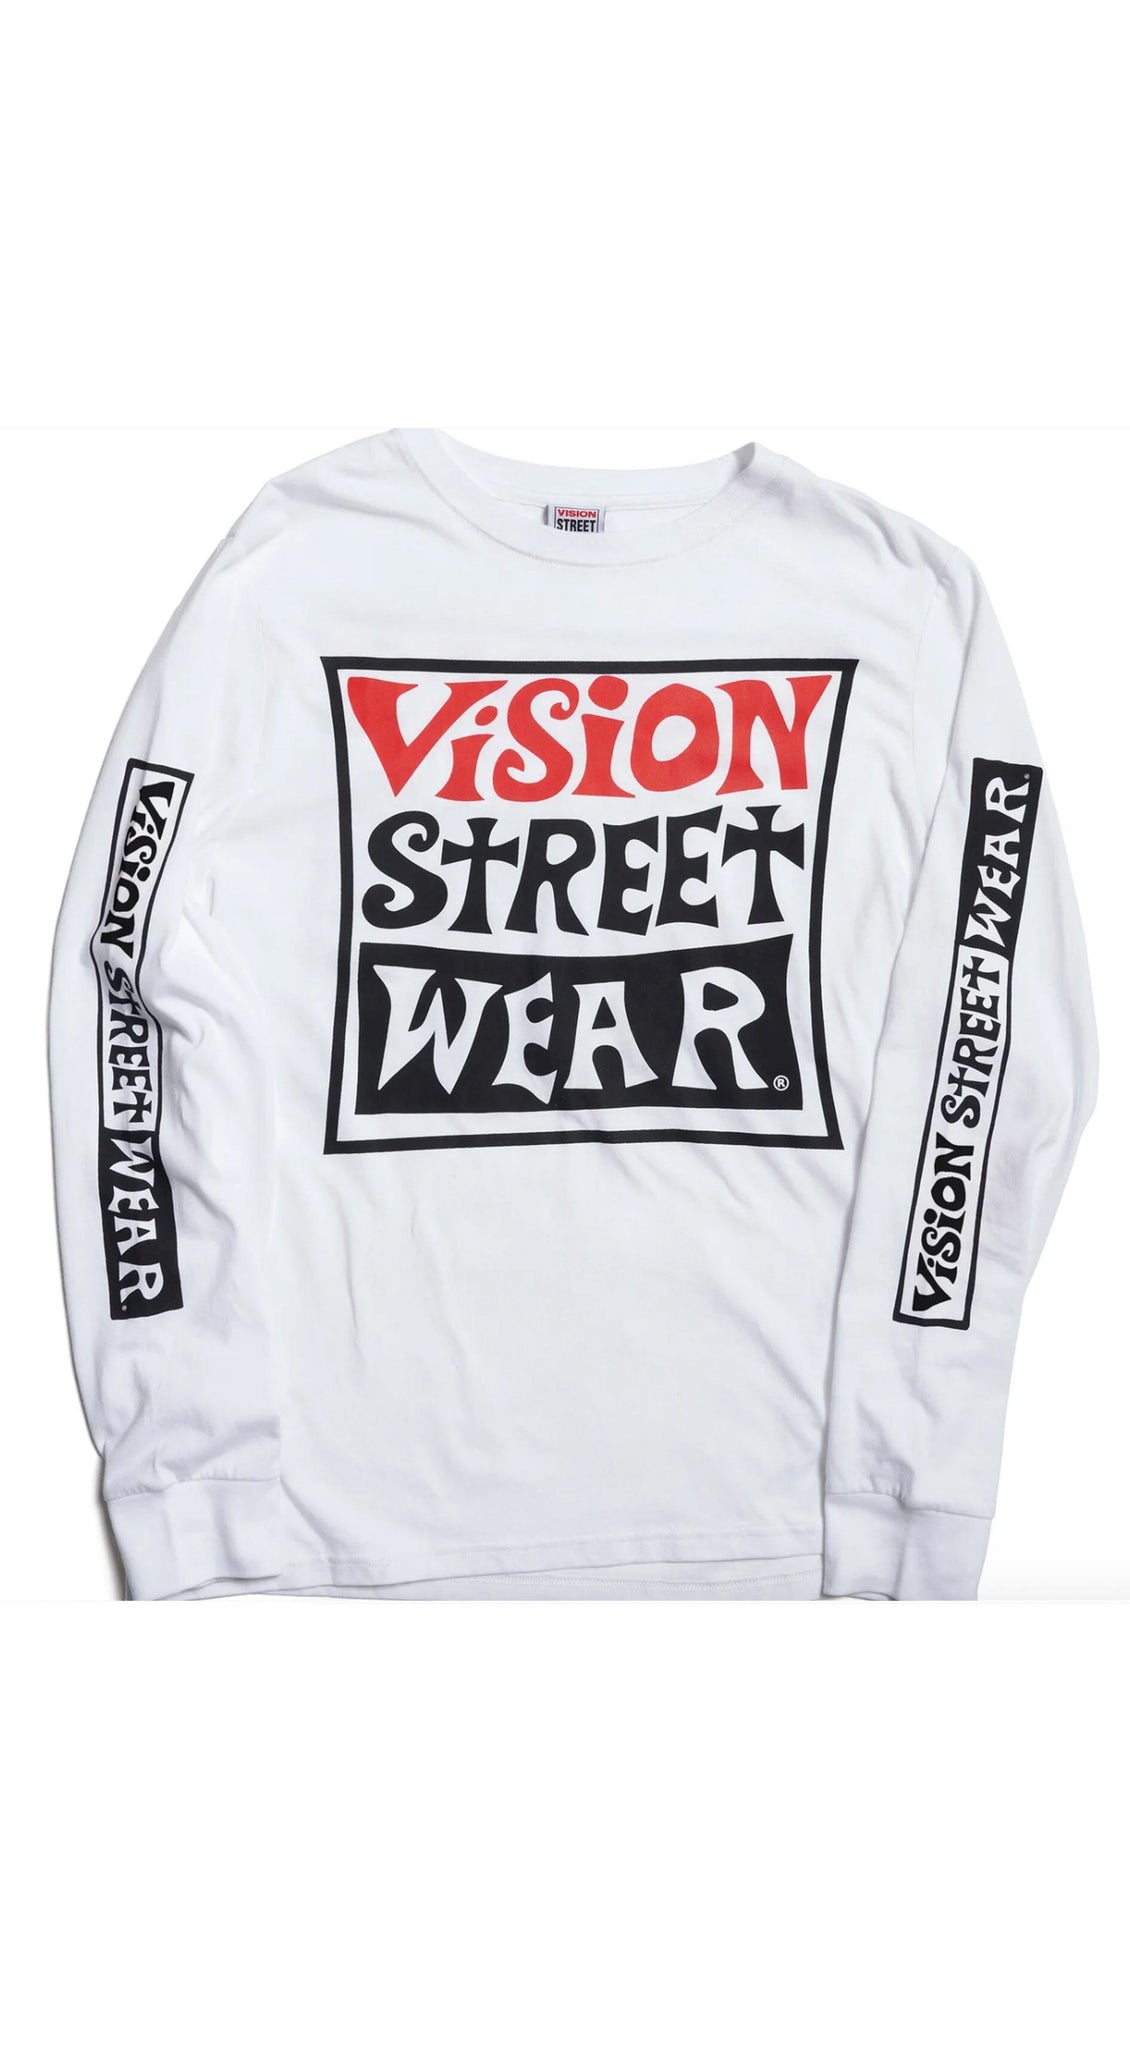 Vision Street Wear Wavy Box Logo Long Sleeve L/S White T-shirt - Camiseta Ropa Vision Skateboards 